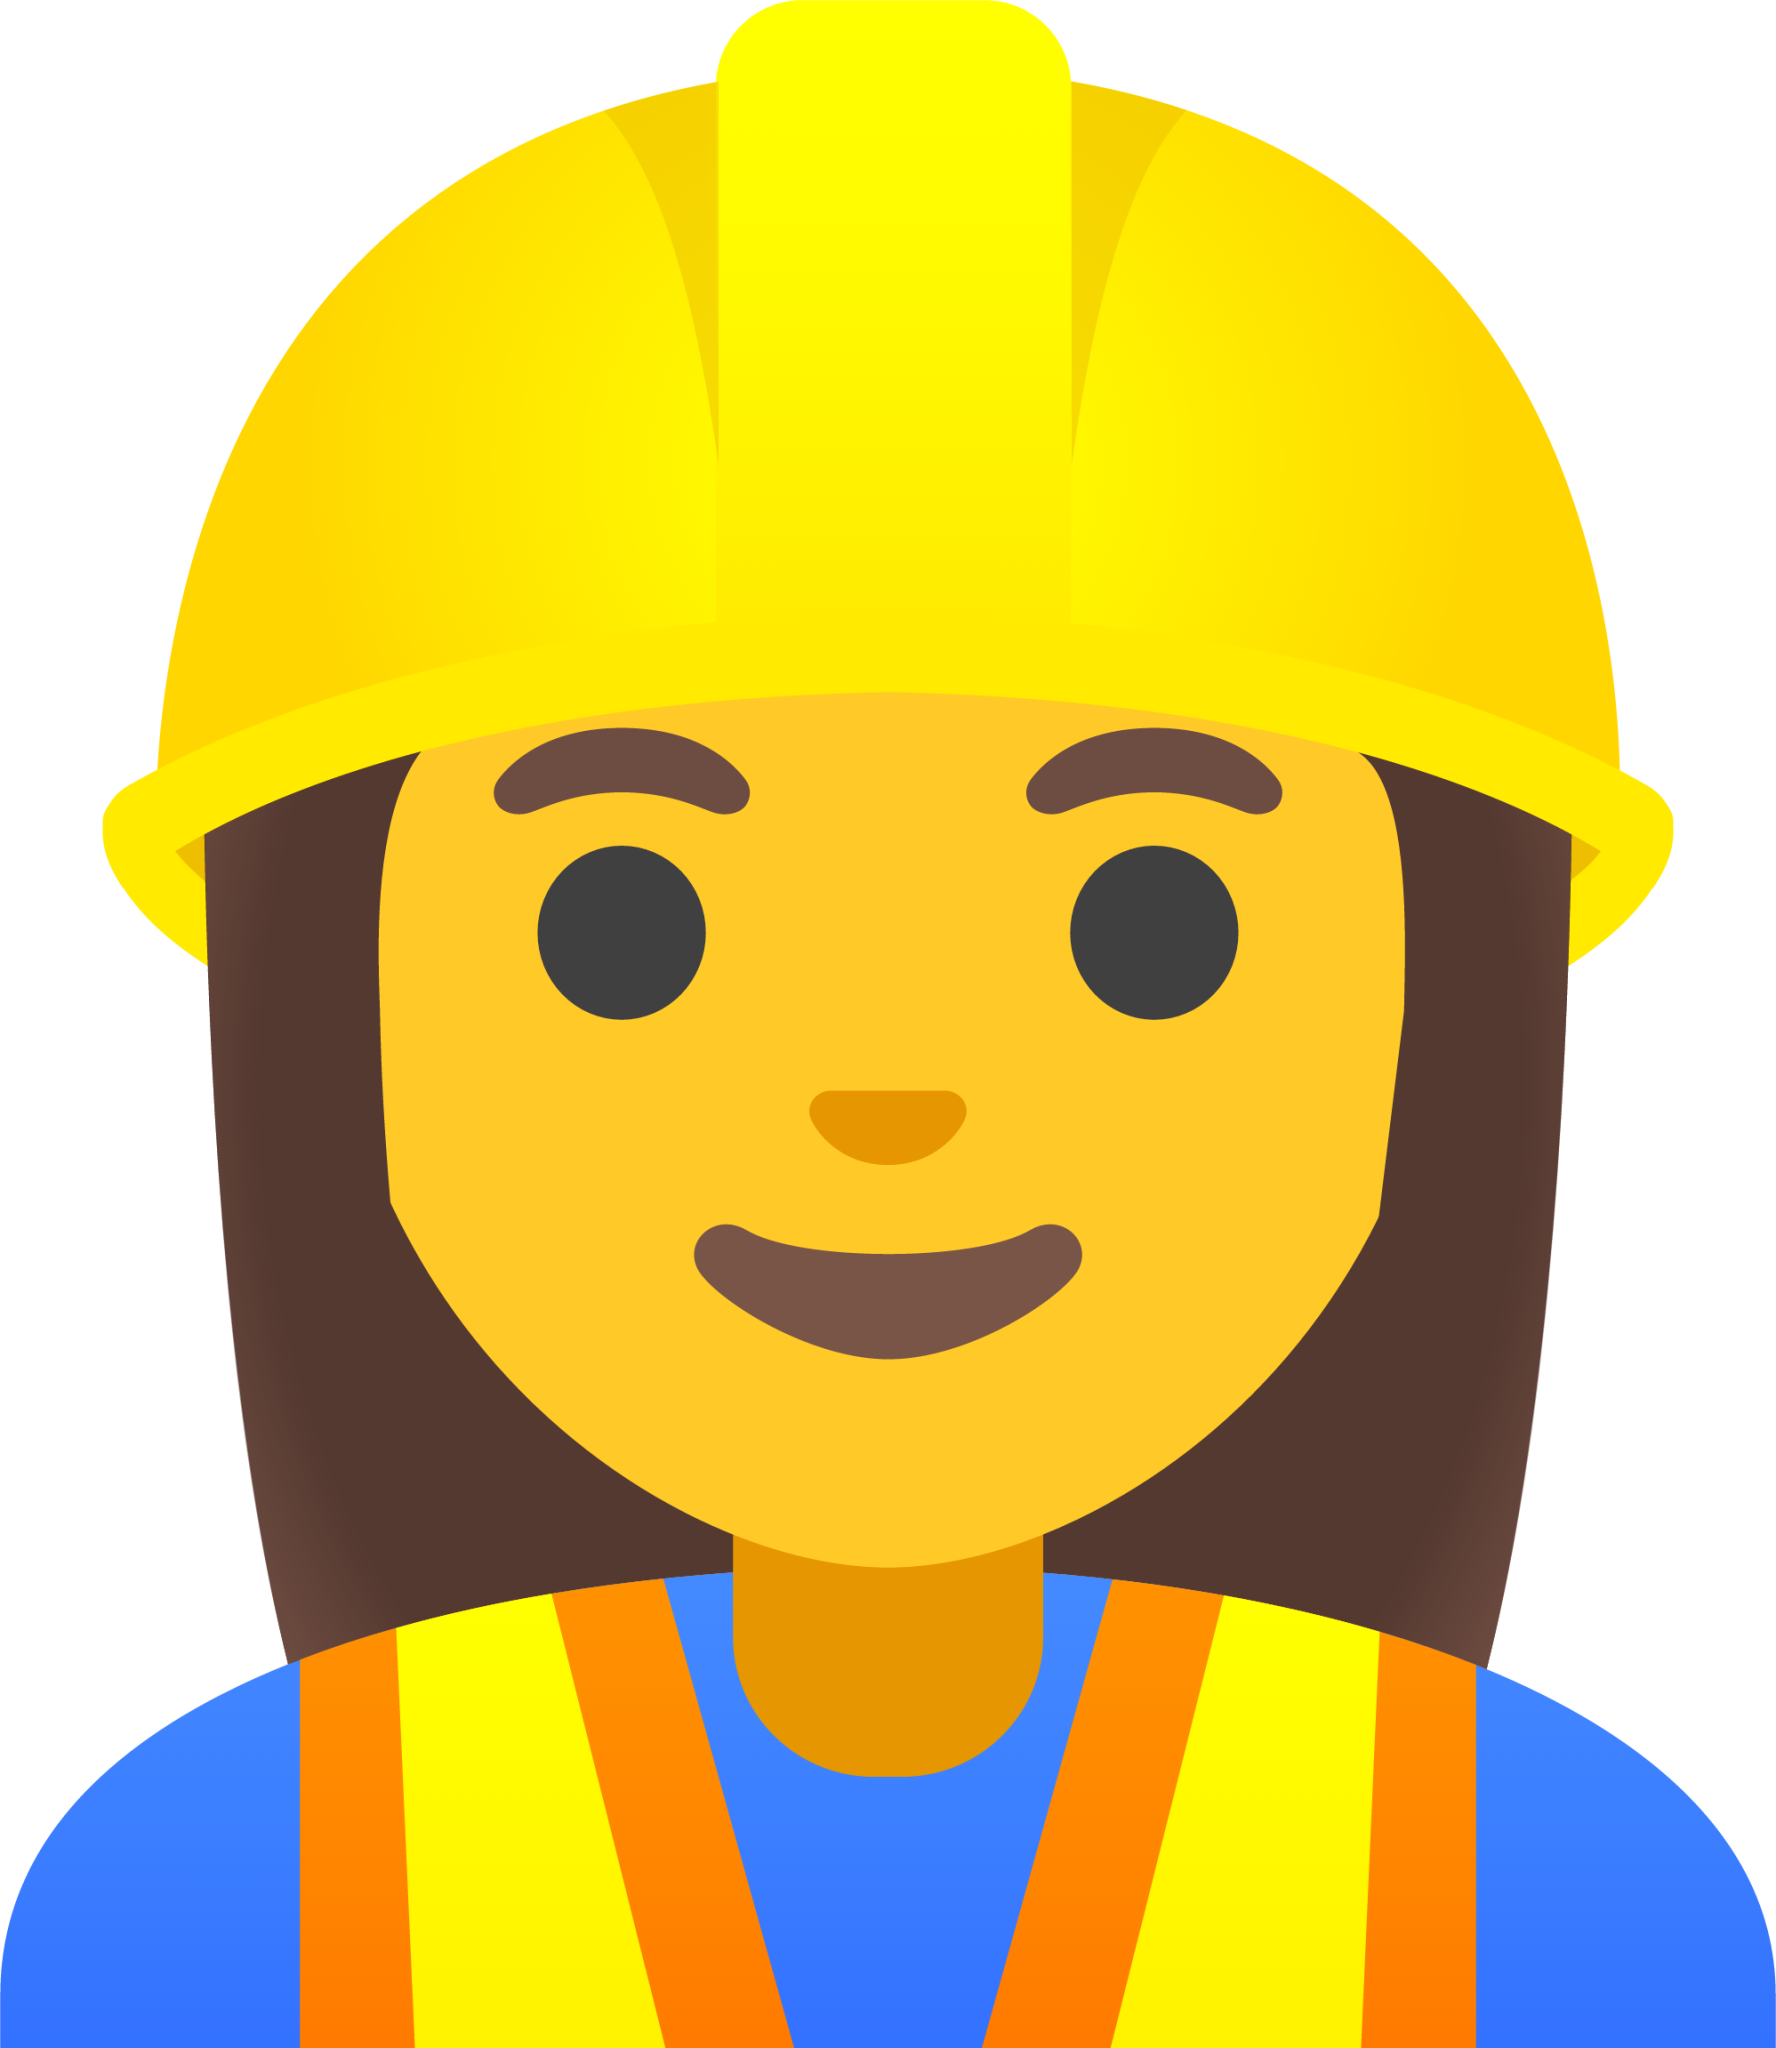 woman construction worker emoji